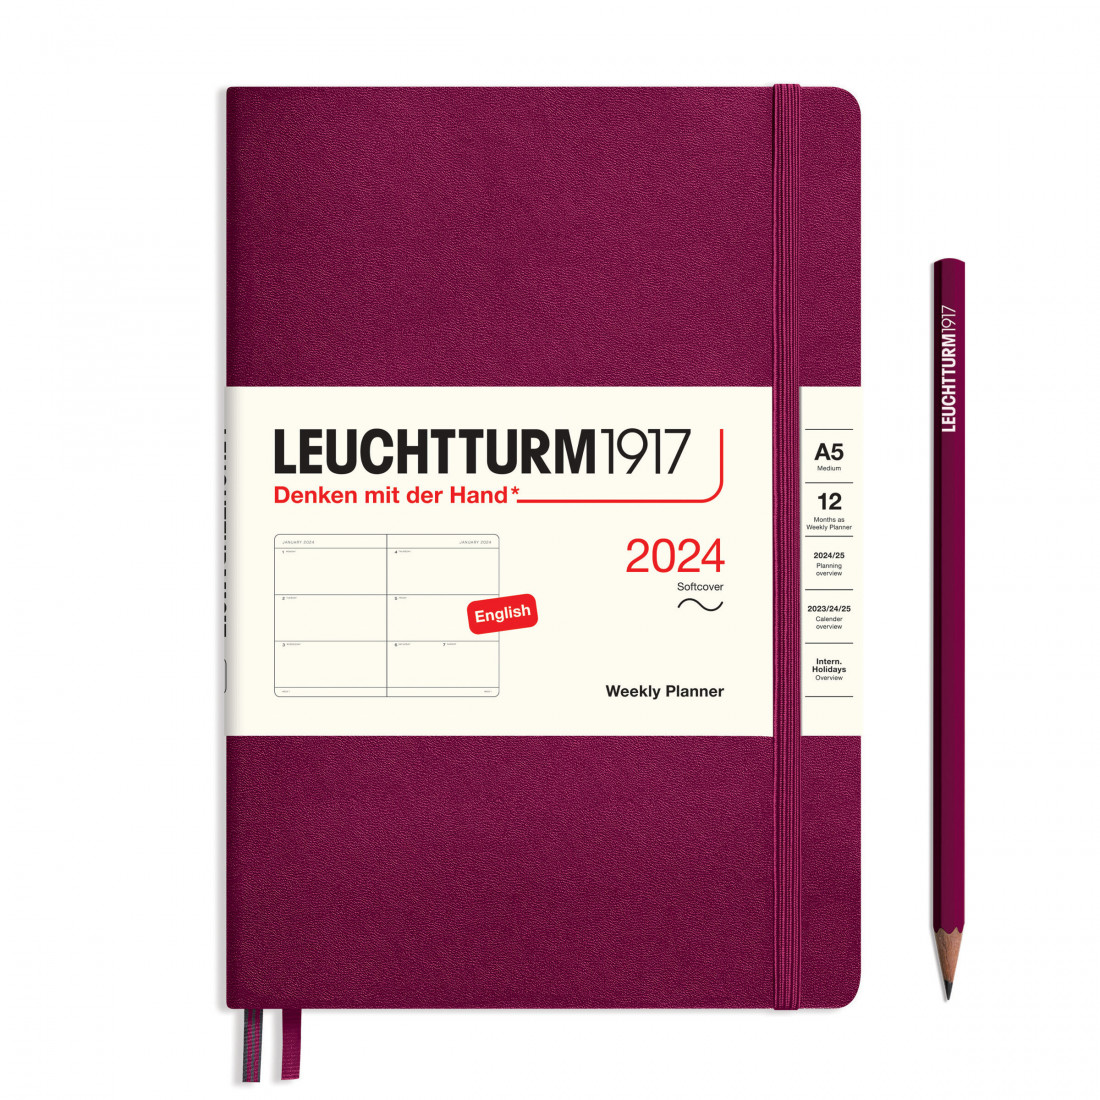 Leuchtturm 1917 Weekly Planner 2024 Port Red Medium A5 Soft Cover